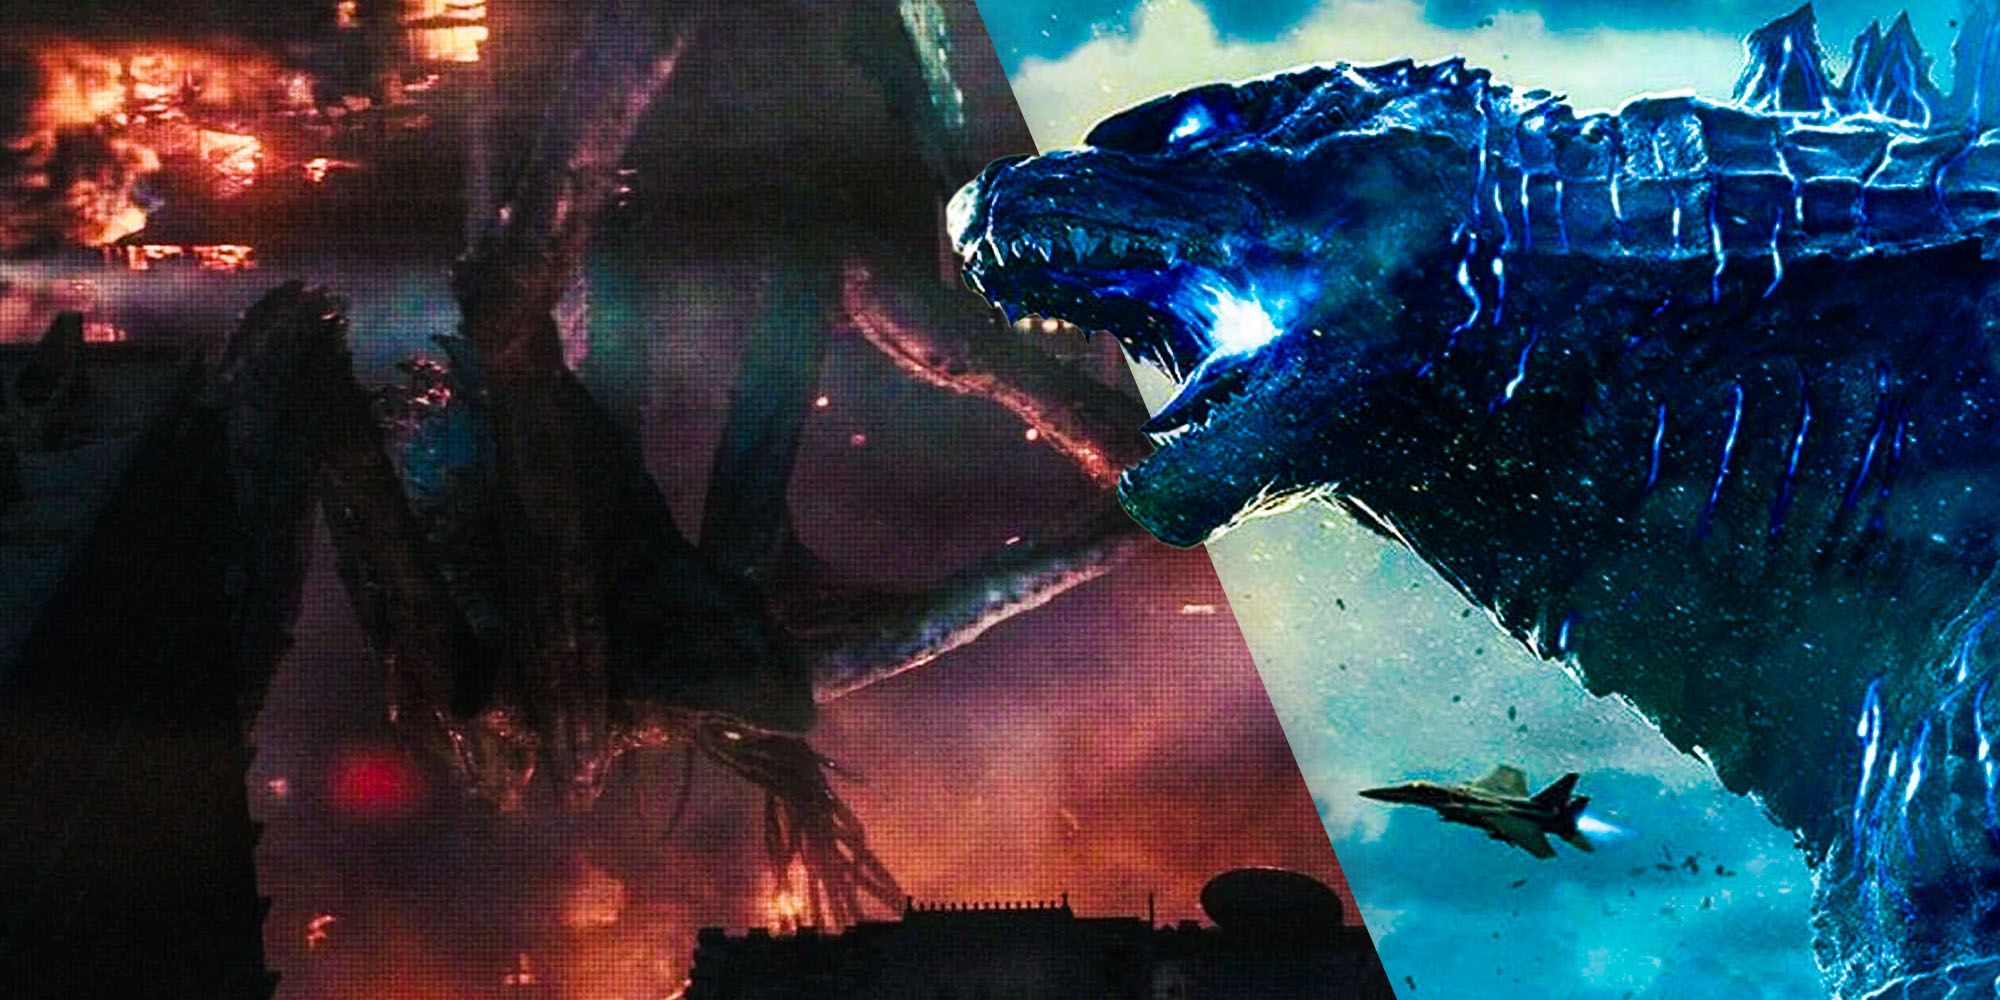 Godzilla defeated a King of the monsters titan Scylla